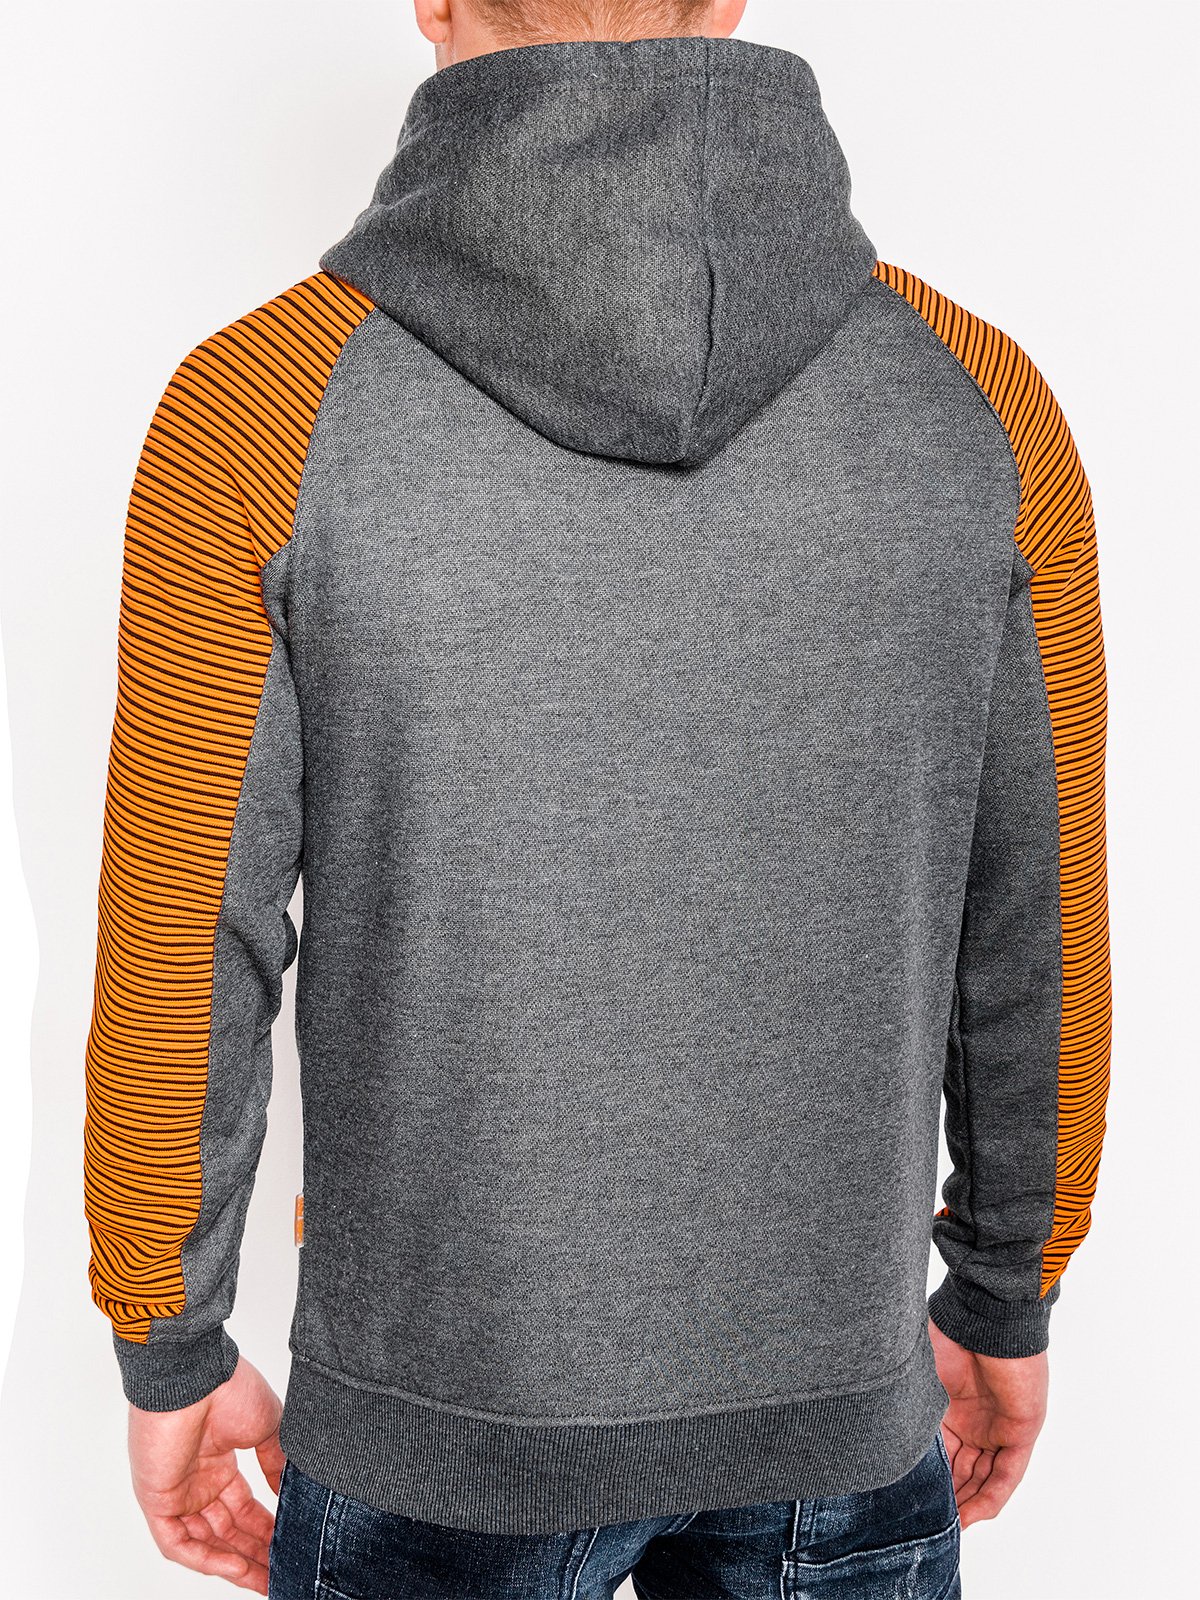 Men's hoodie B821 - dark grey/orange | MODONE wholesale - Clothing For Men